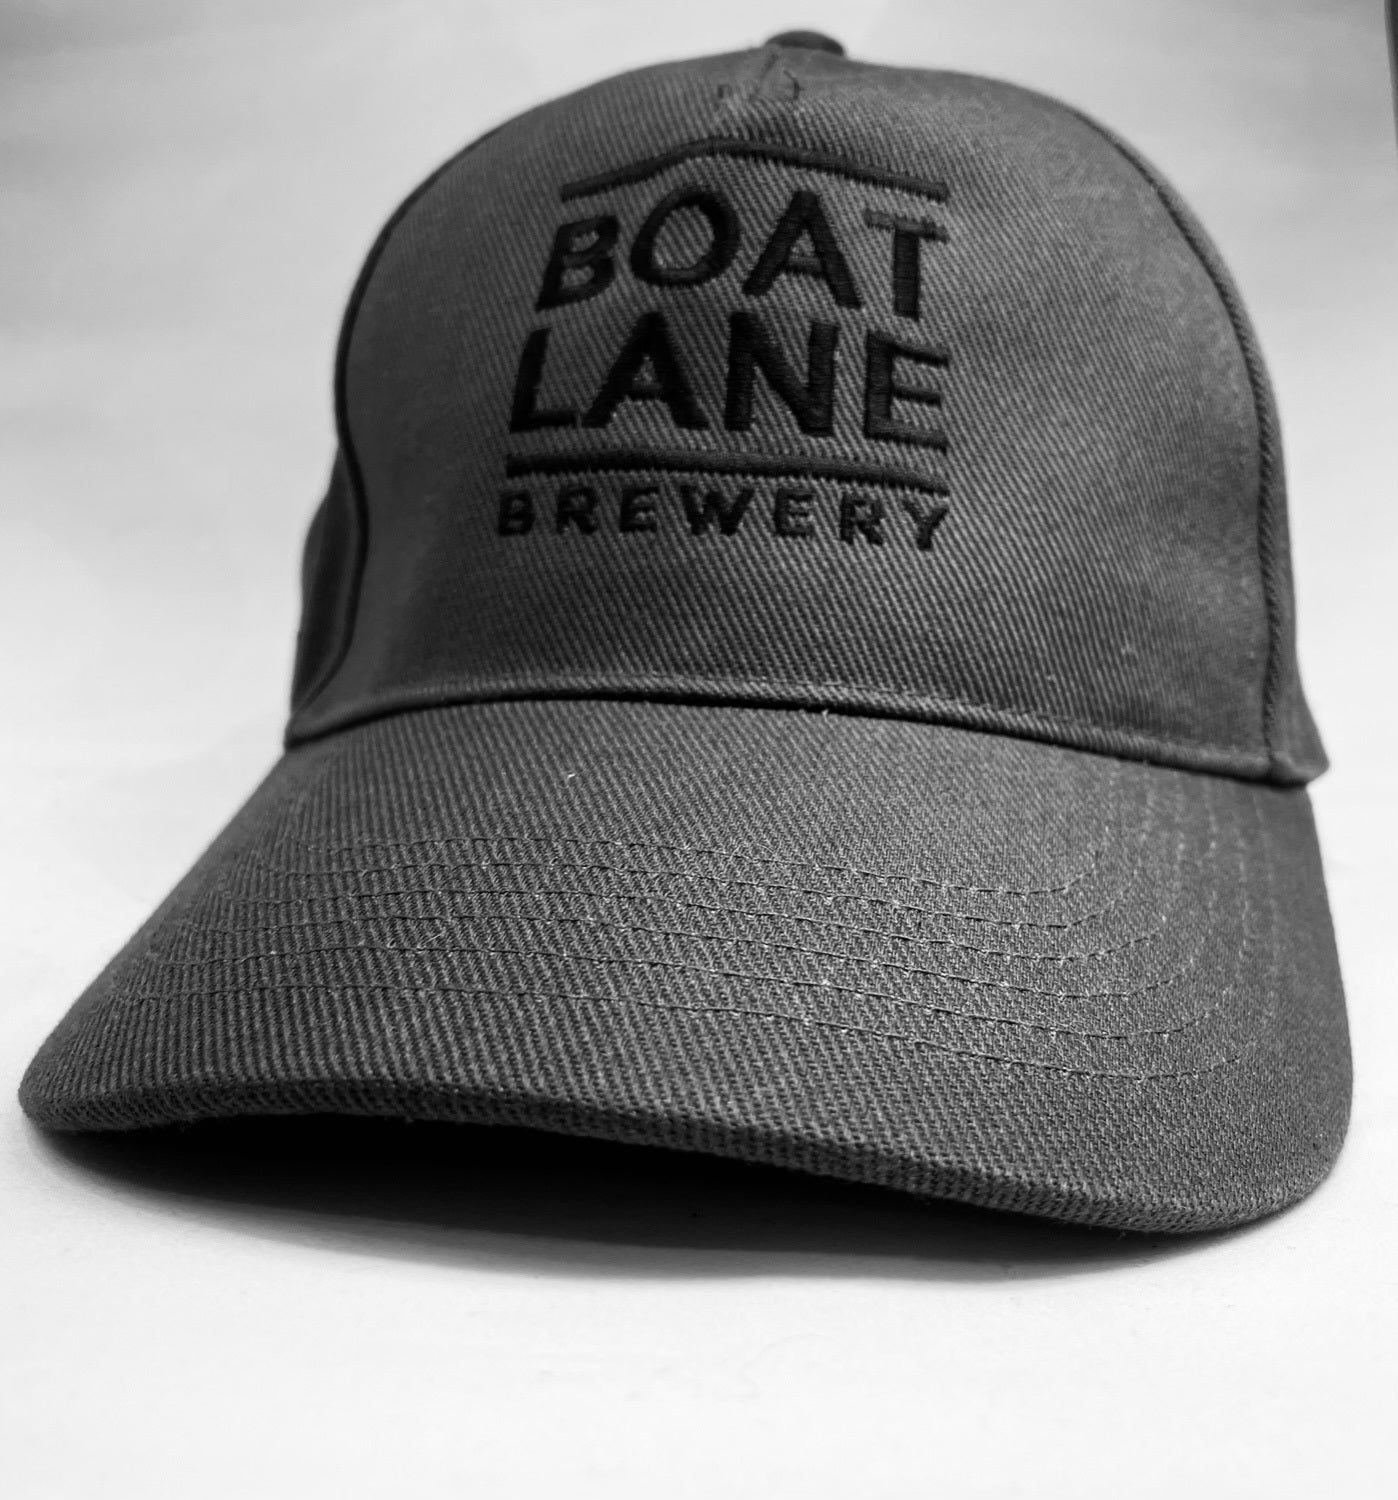 Boat Lane Brewery Cap